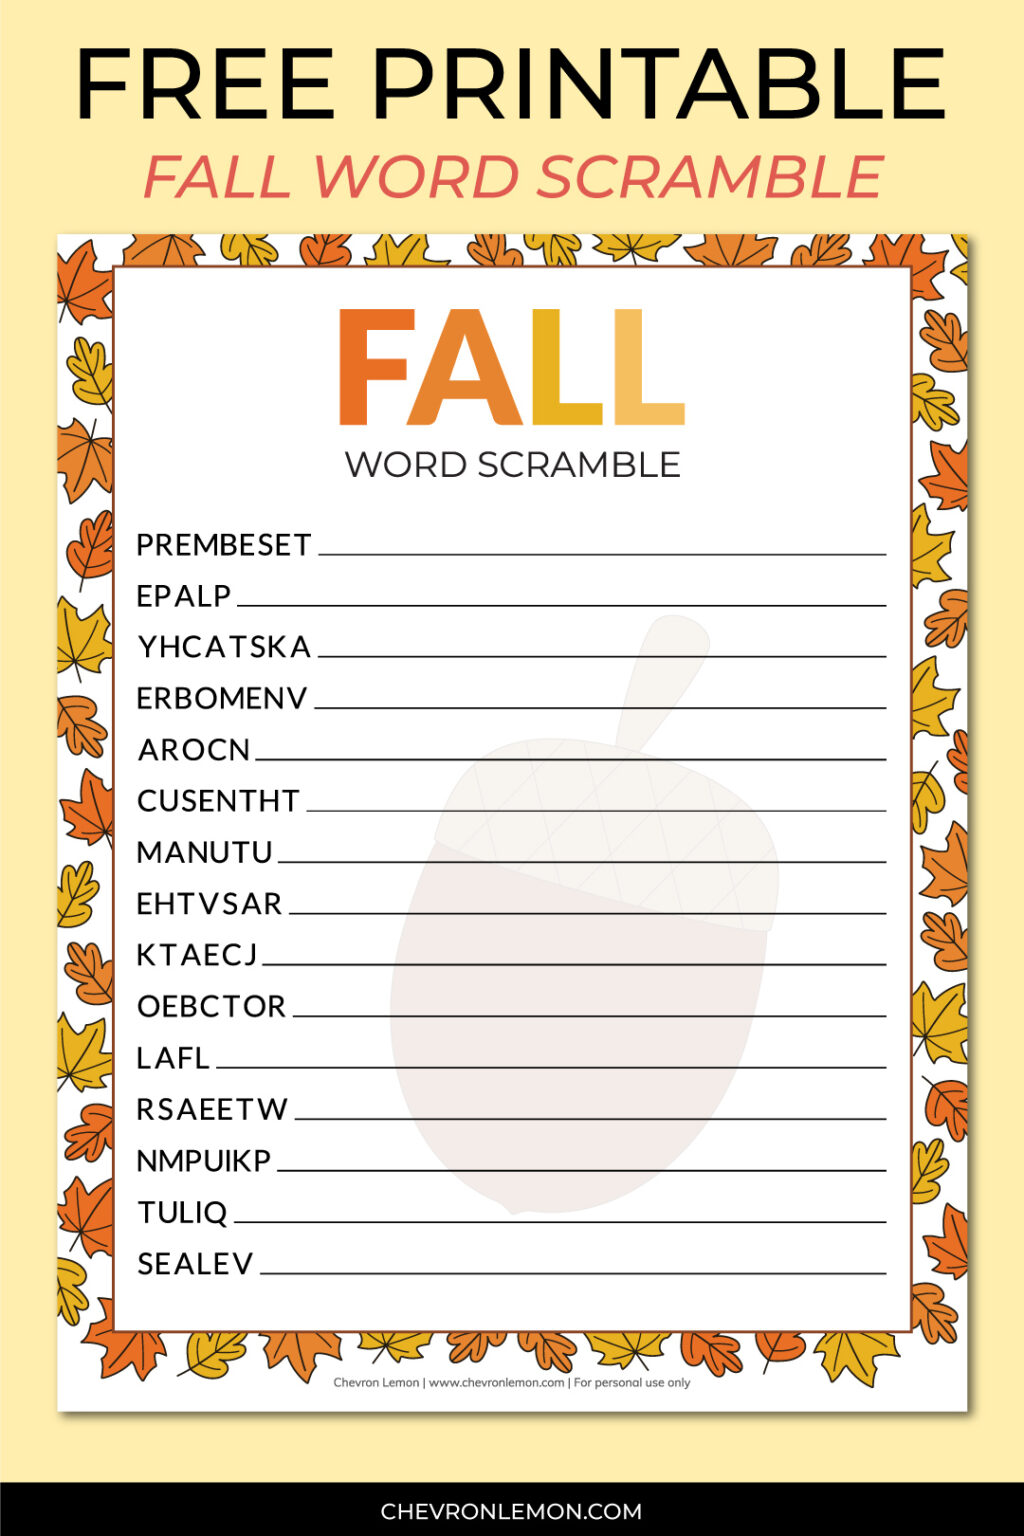 Free Printable Fall Word Scramble